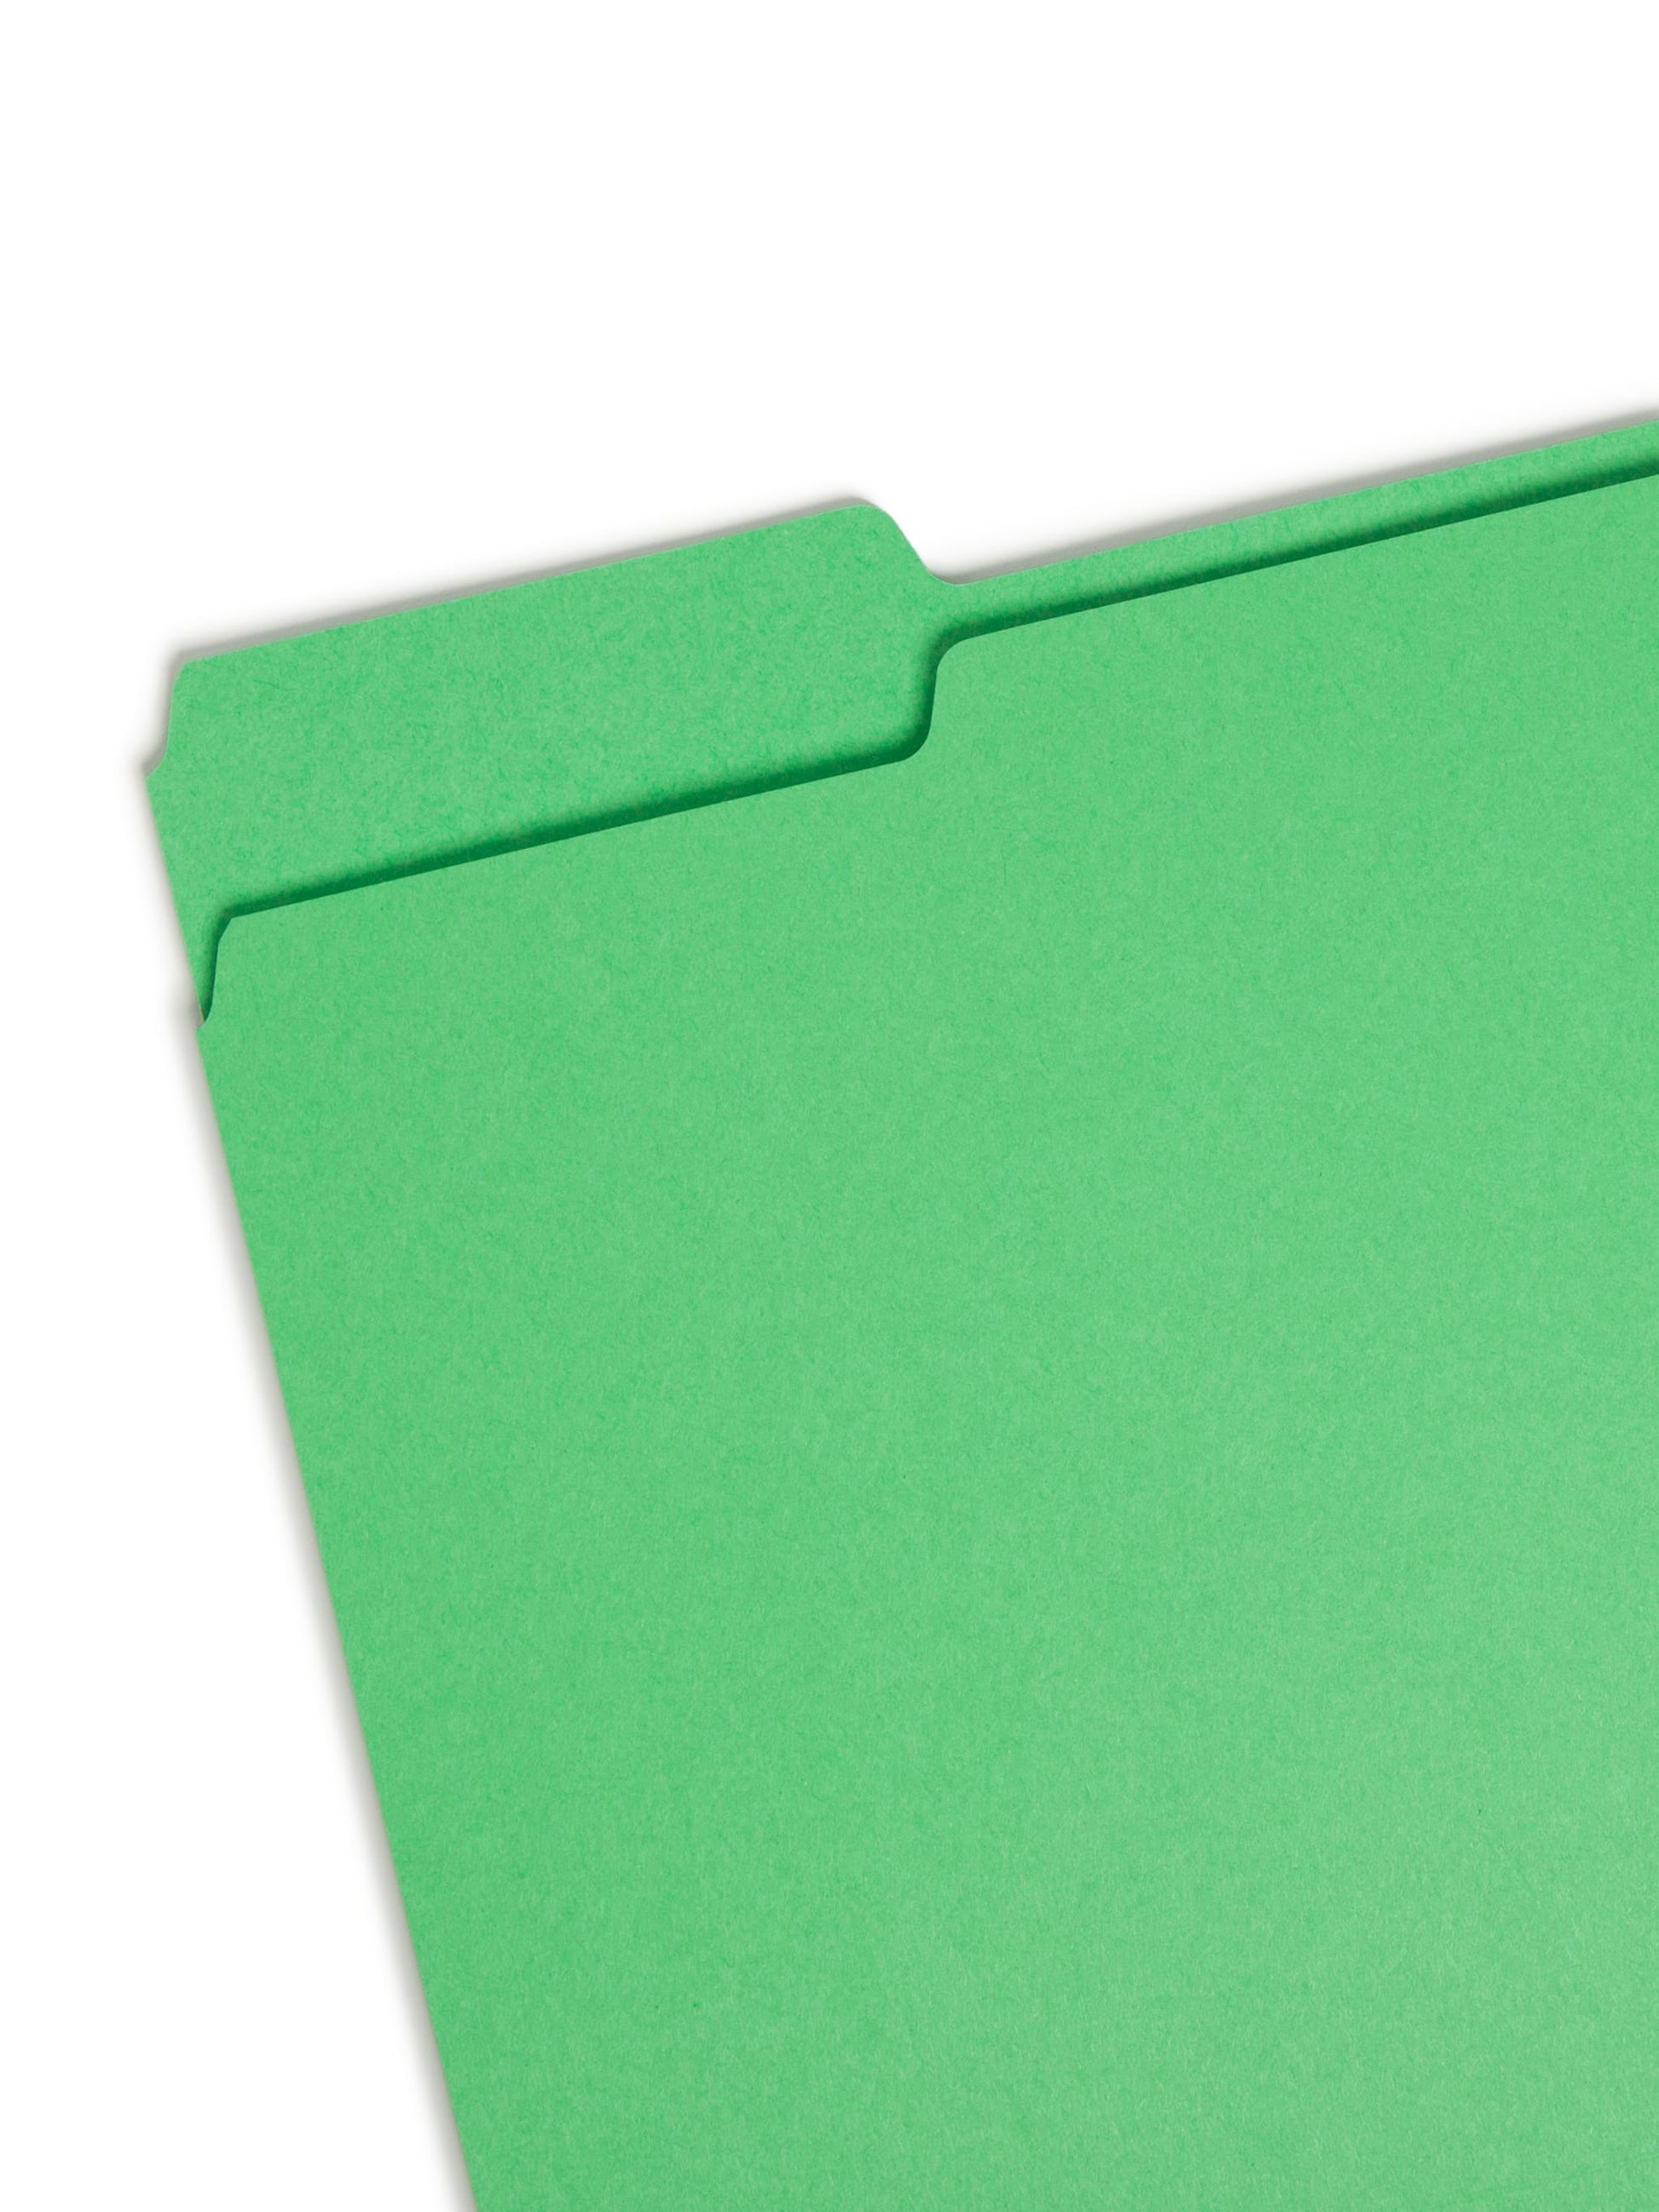 Standard File Folders, 1/3-Cut Tab, Green Color, Letter Size, Set of 100, 086486121439